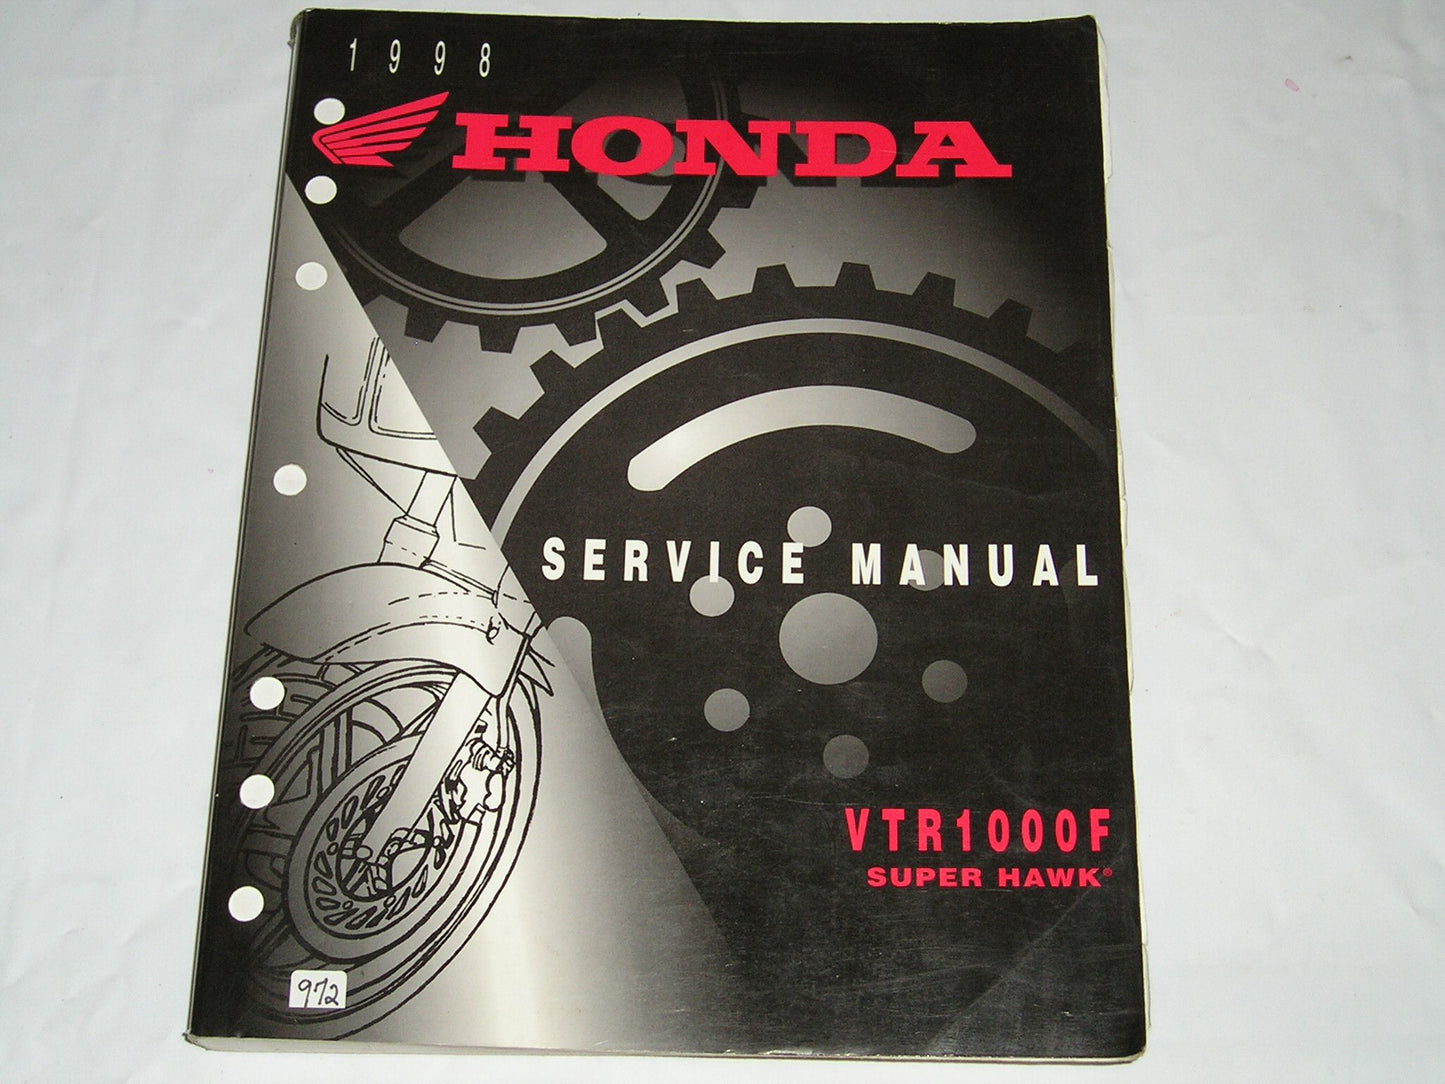 HONDA VTR1000F  VTR1000 F  1998  Service Manual  61MBB00  #972